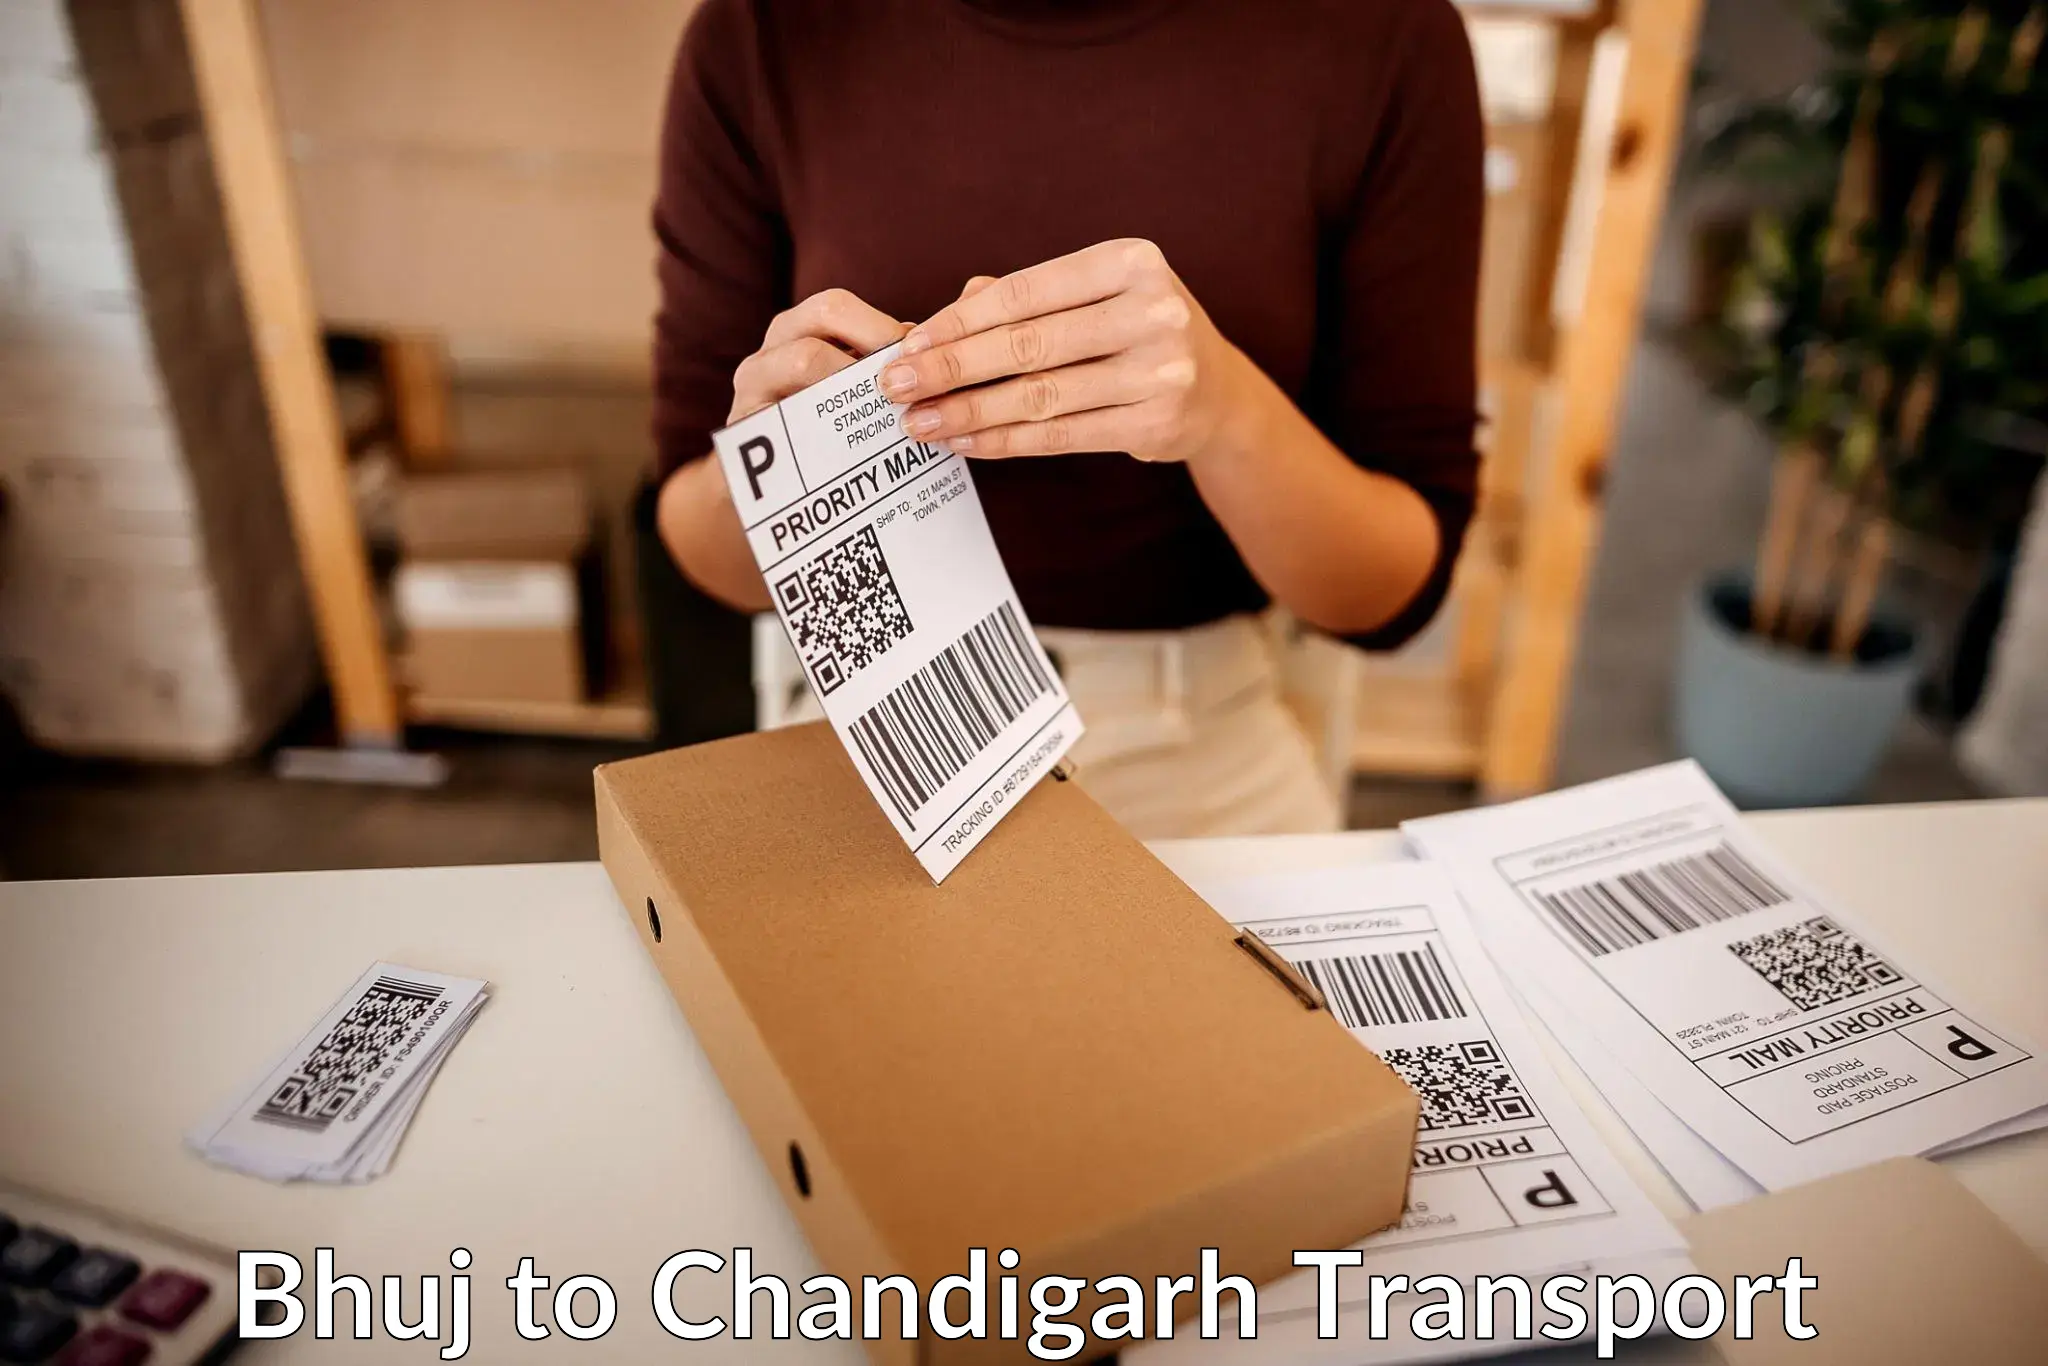 Online transport service Bhuj to Chandigarh